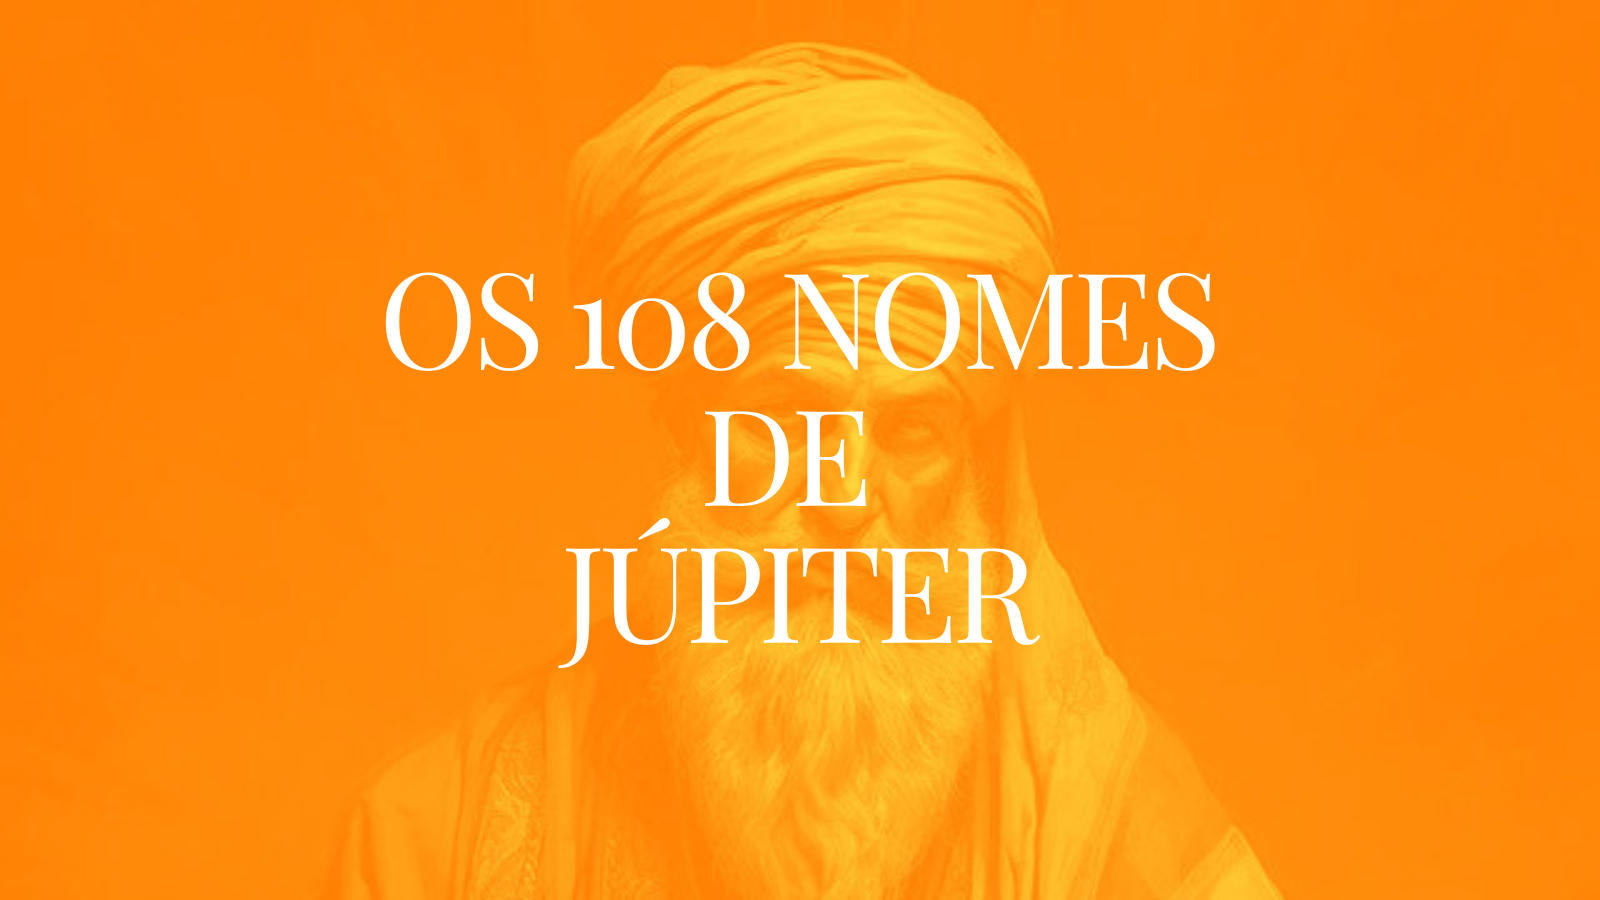 Os 108 Nomes de Júpiter